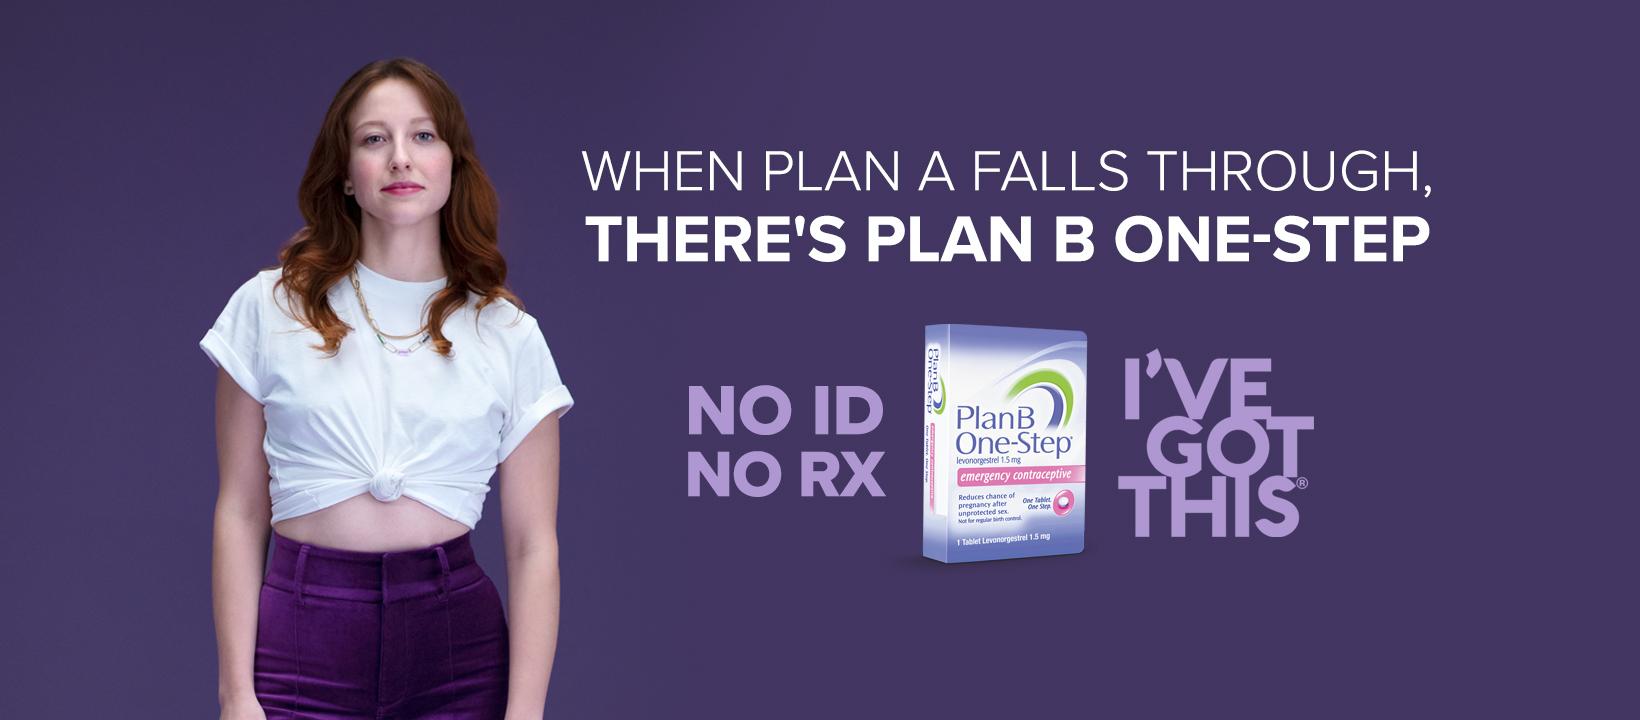 A Plan B pill ad